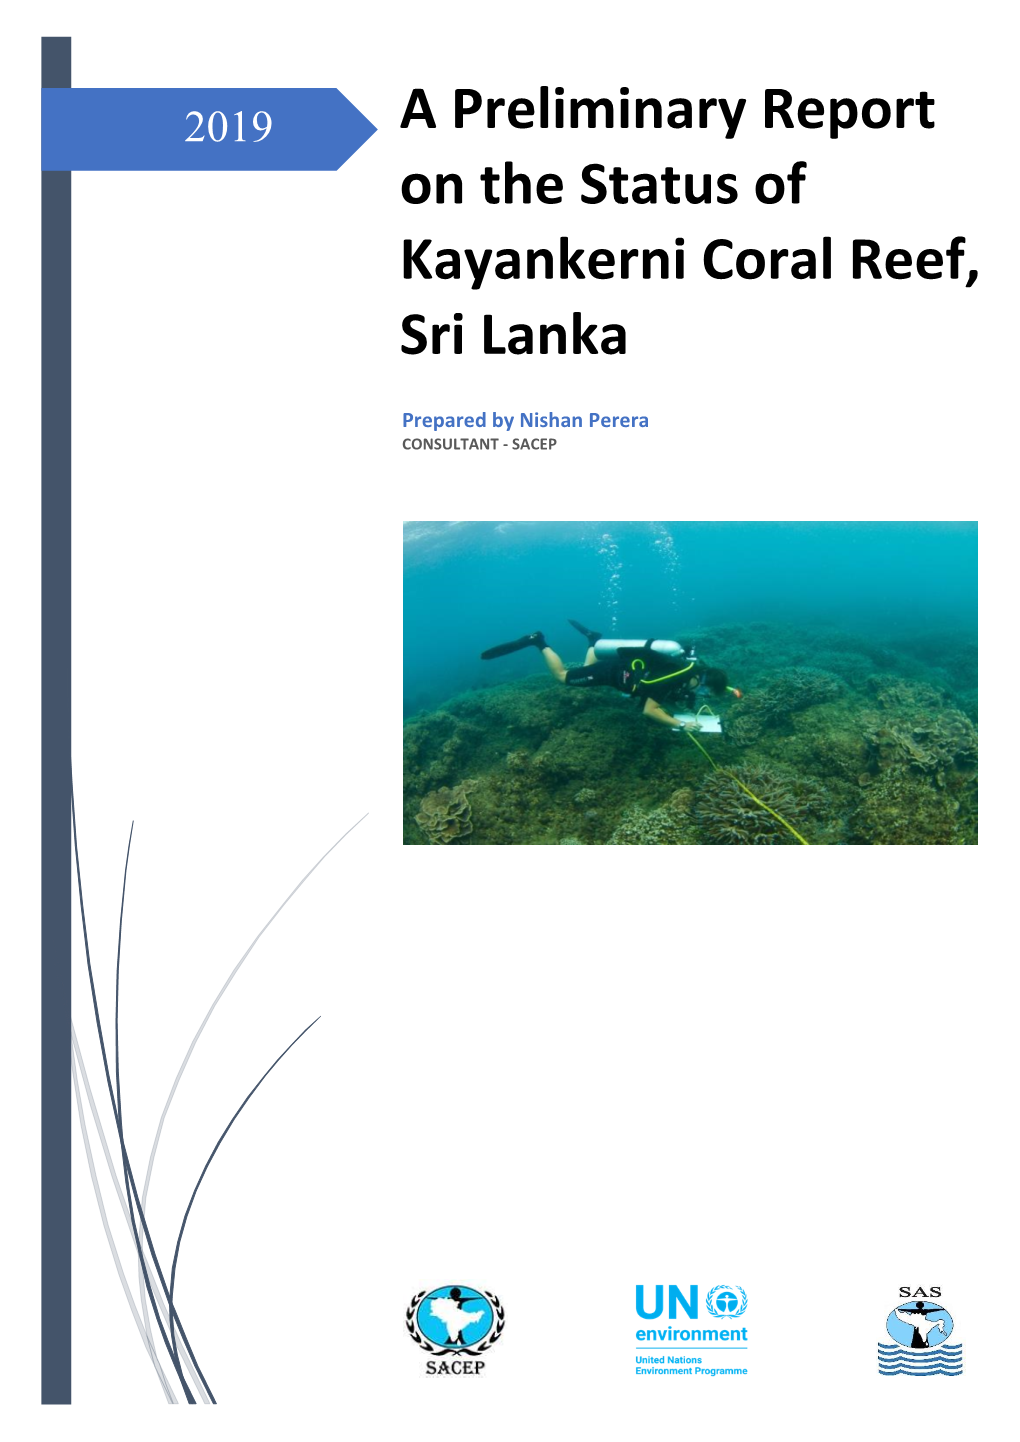 A Preliminary Report on the Status of Kayankerni Coral Reef, Sri Lanka